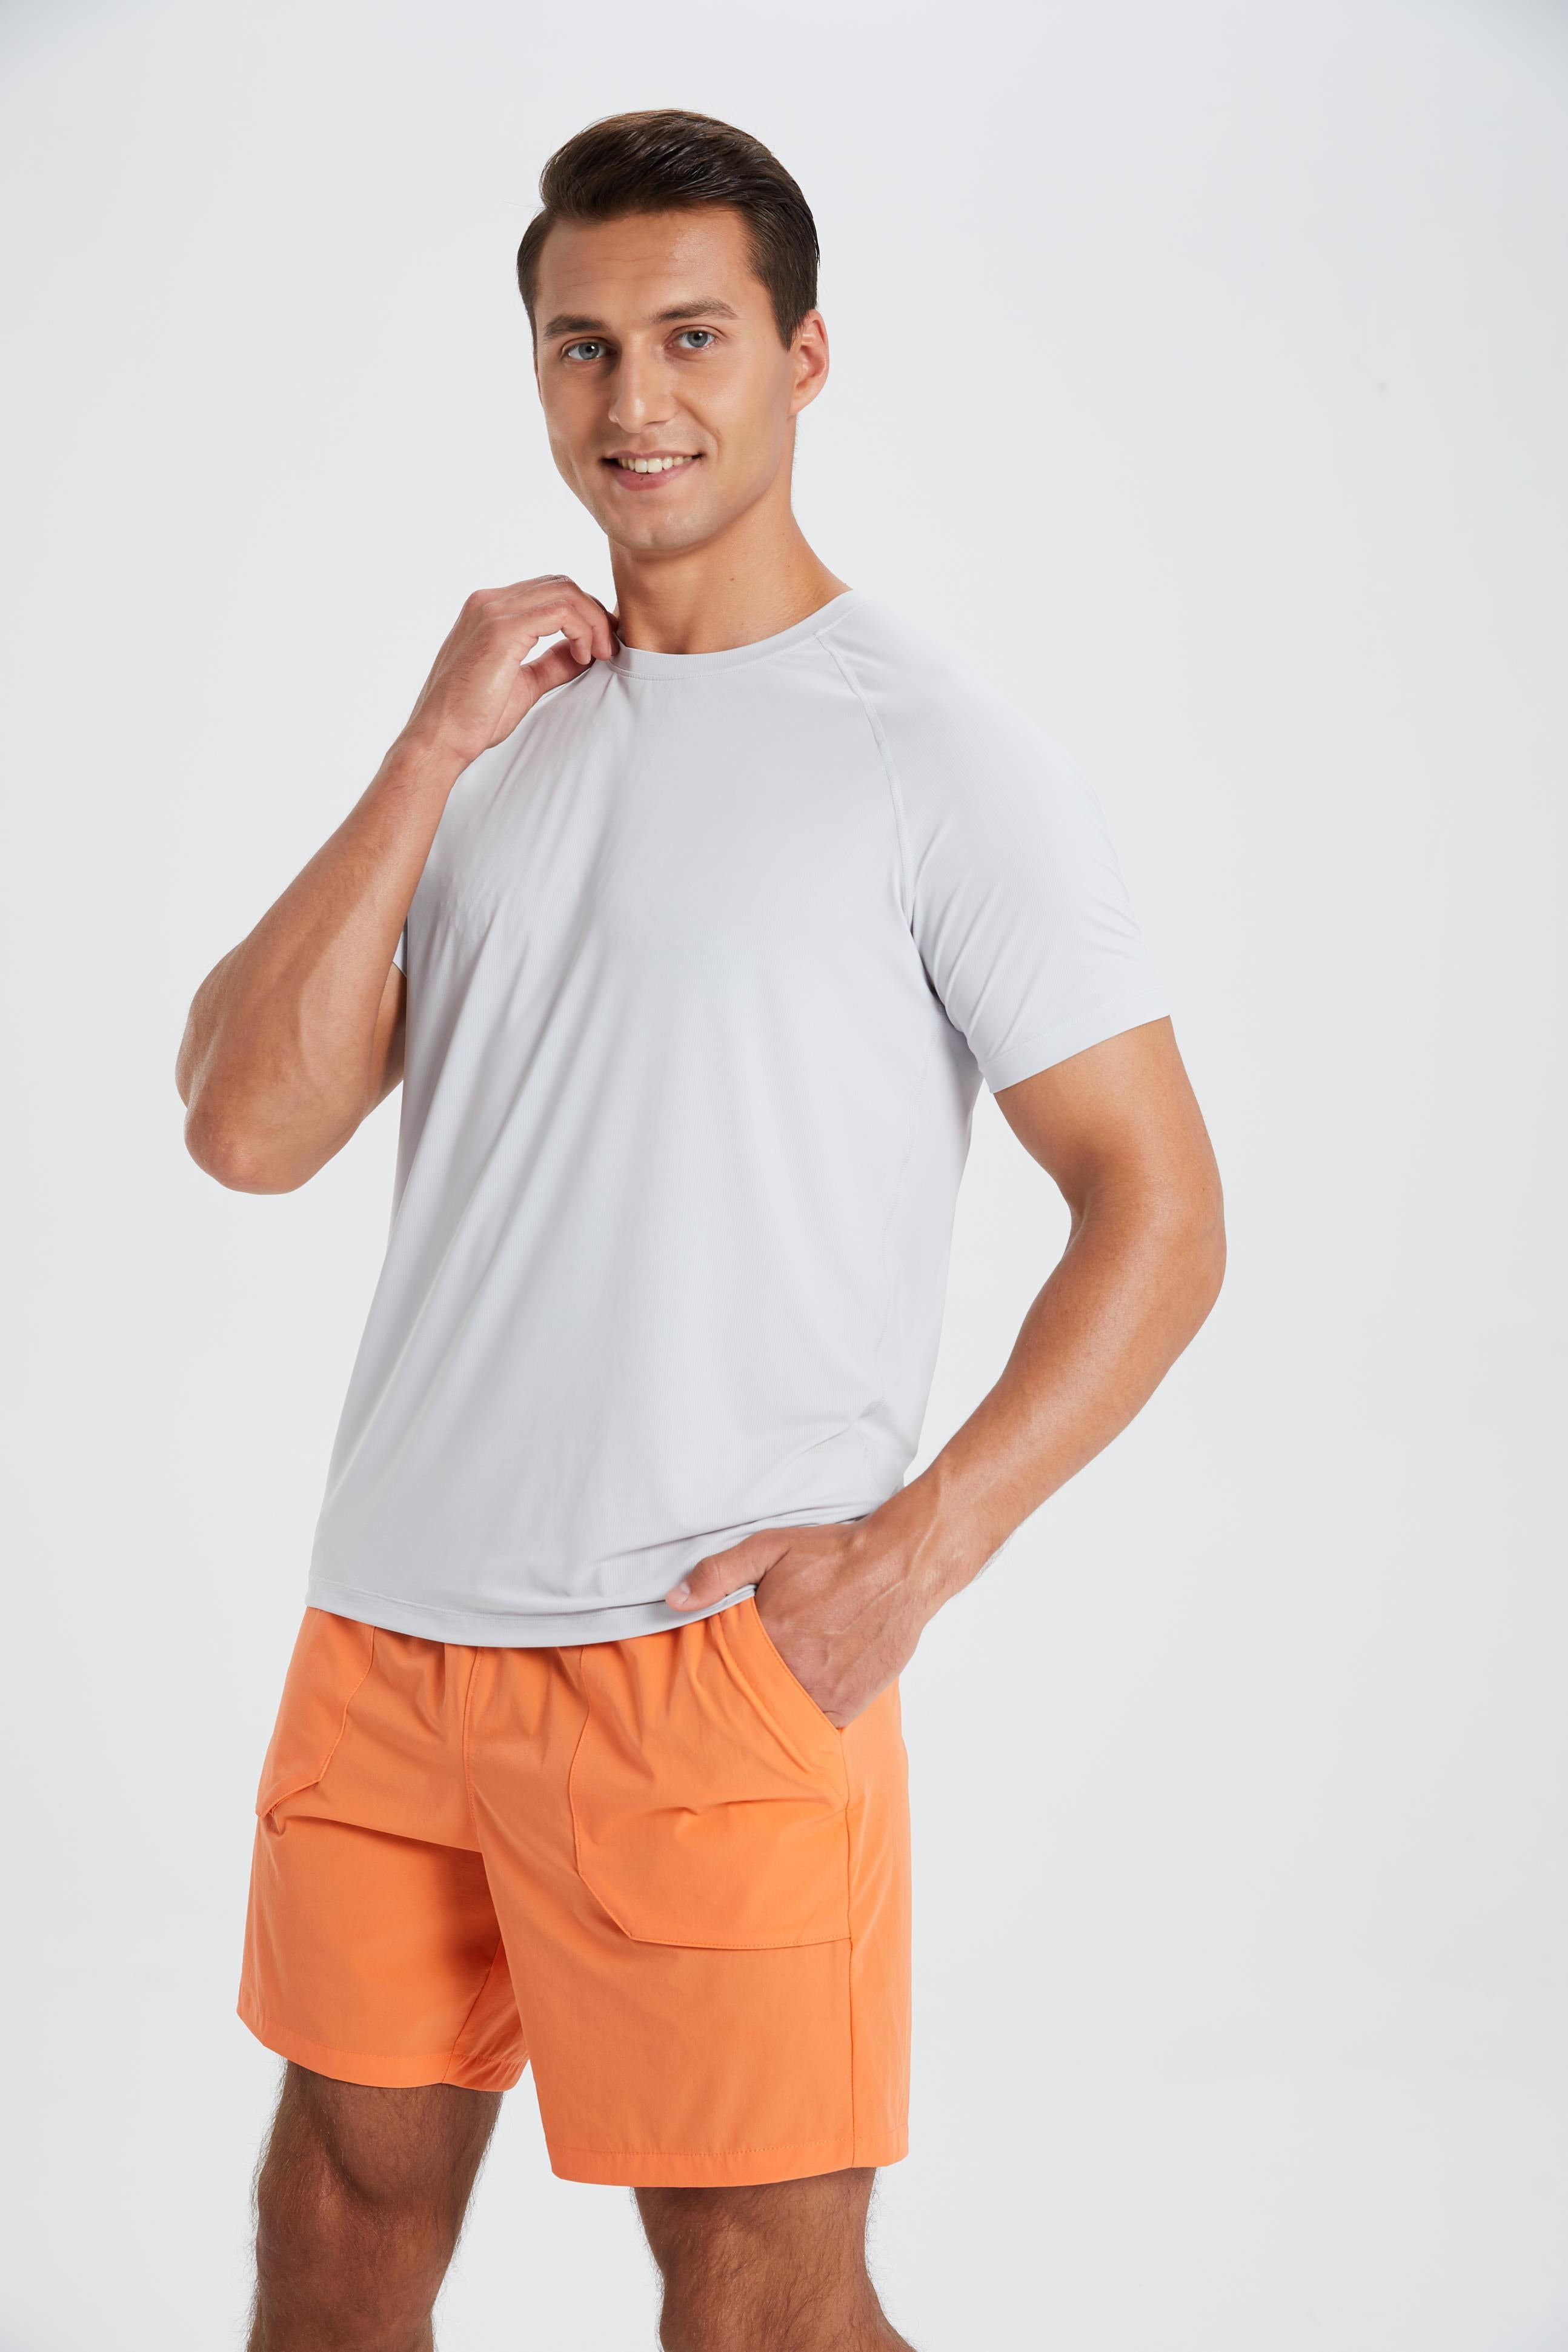 BALEAF Men's Quick Dry Short Sleeve T-Shirt Sun Protection Running Workout Shirts